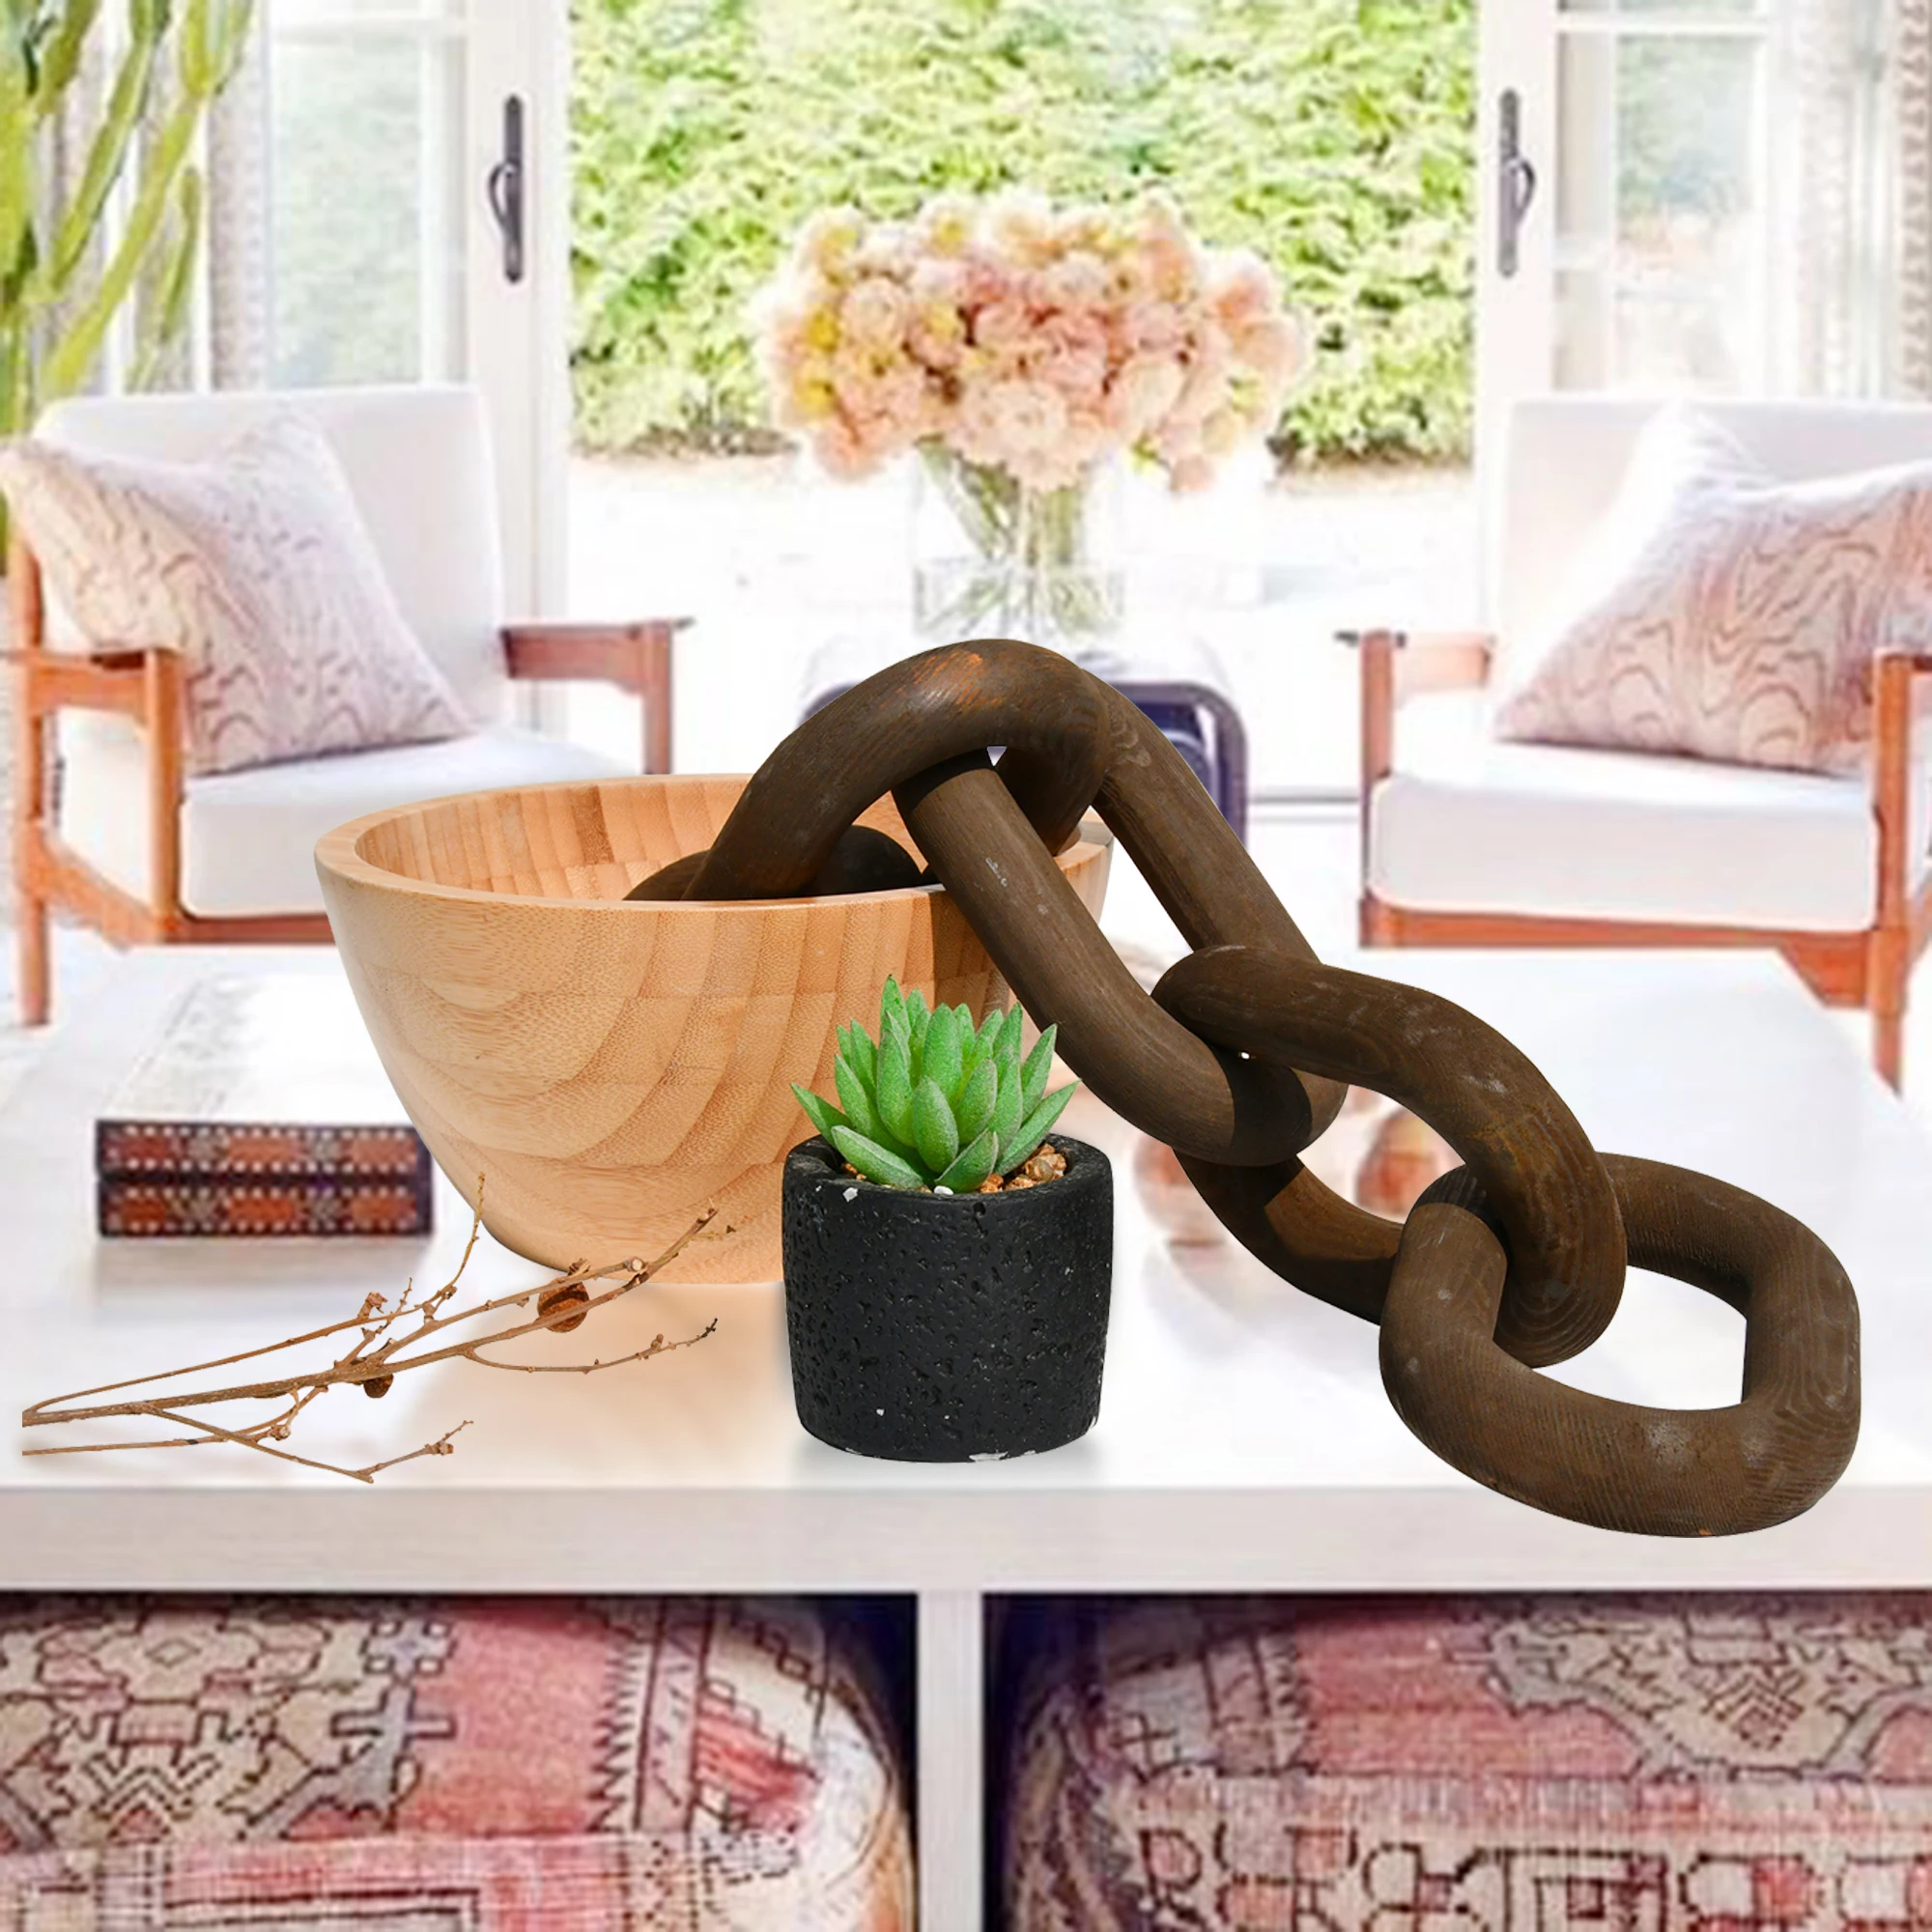 Acacia Wood Chain Link Decor Knot Home Living Room Decor Knot Modern Farmhouse Home Decor for Table Shelf